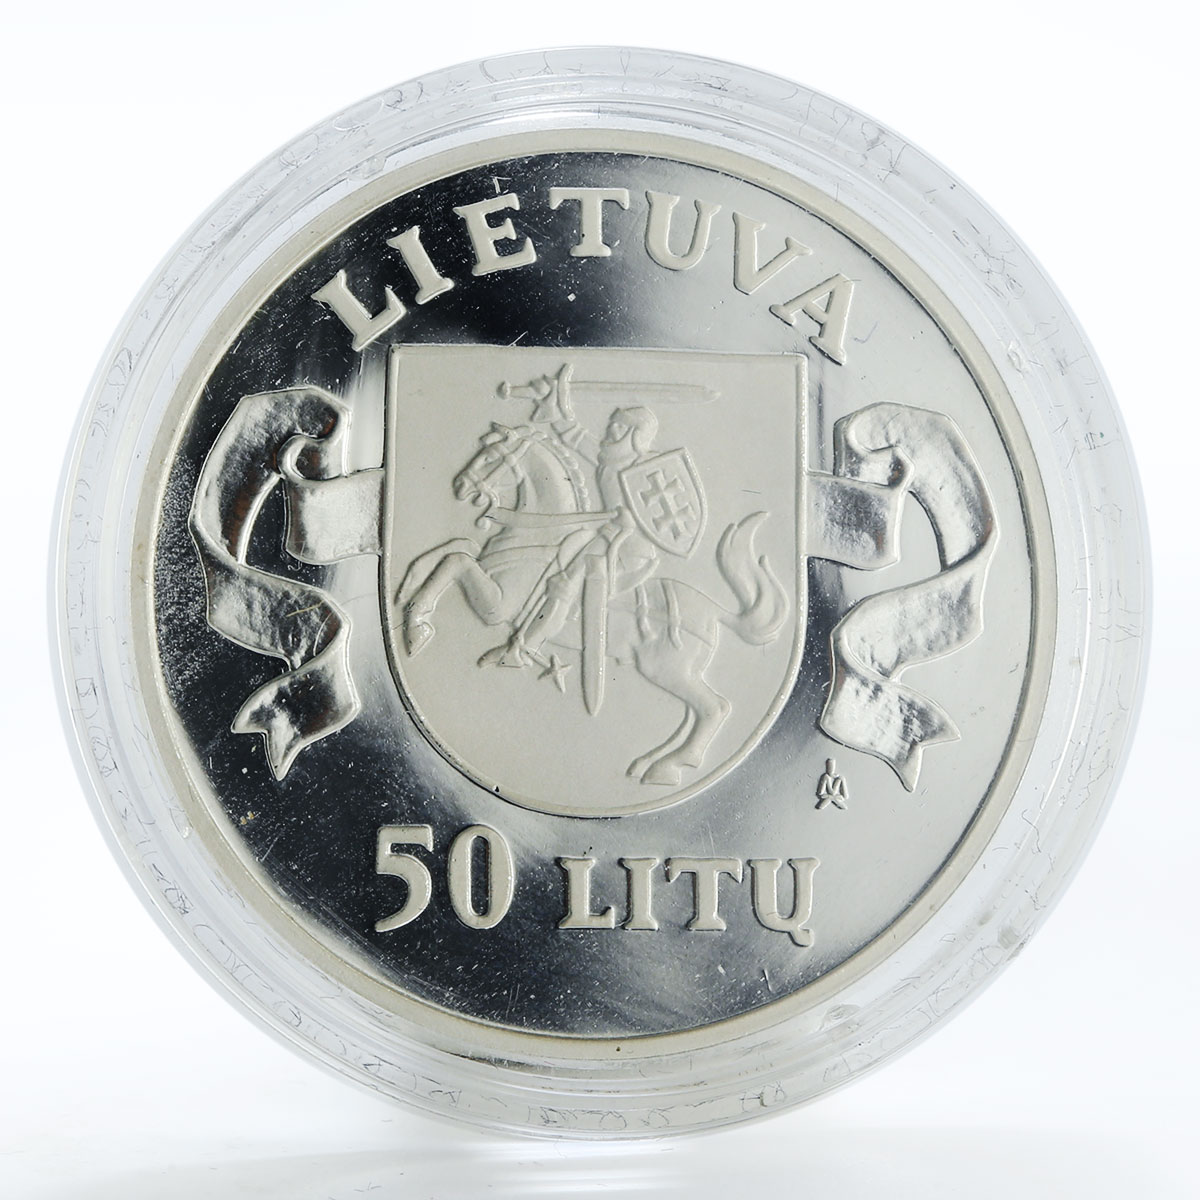 Lithuania 50 litu Coat of Arms January 13, 1991 silver coin 1996